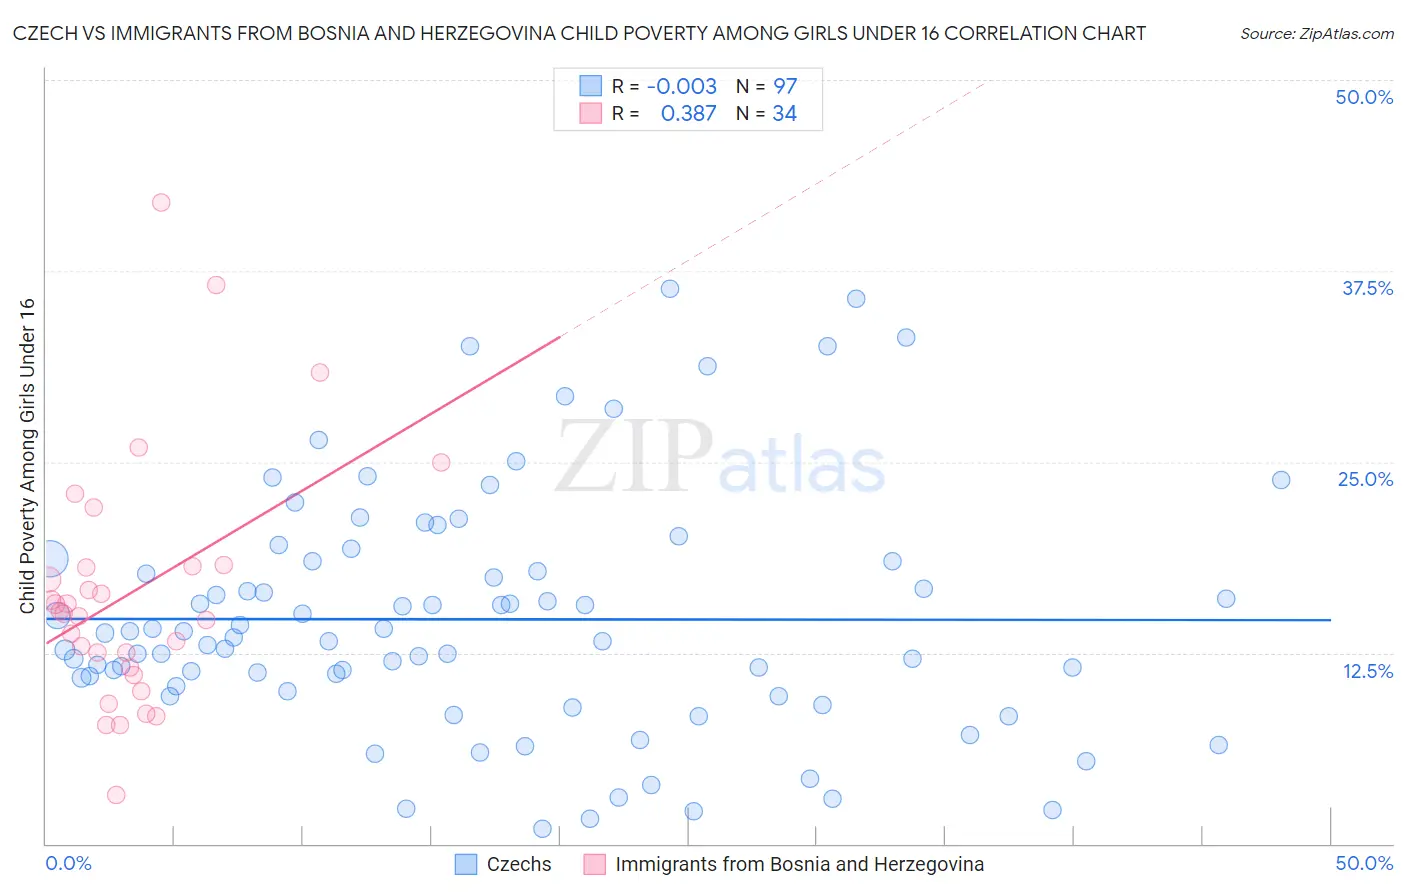 Czech vs Immigrants from Bosnia and Herzegovina Child Poverty Among Girls Under 16